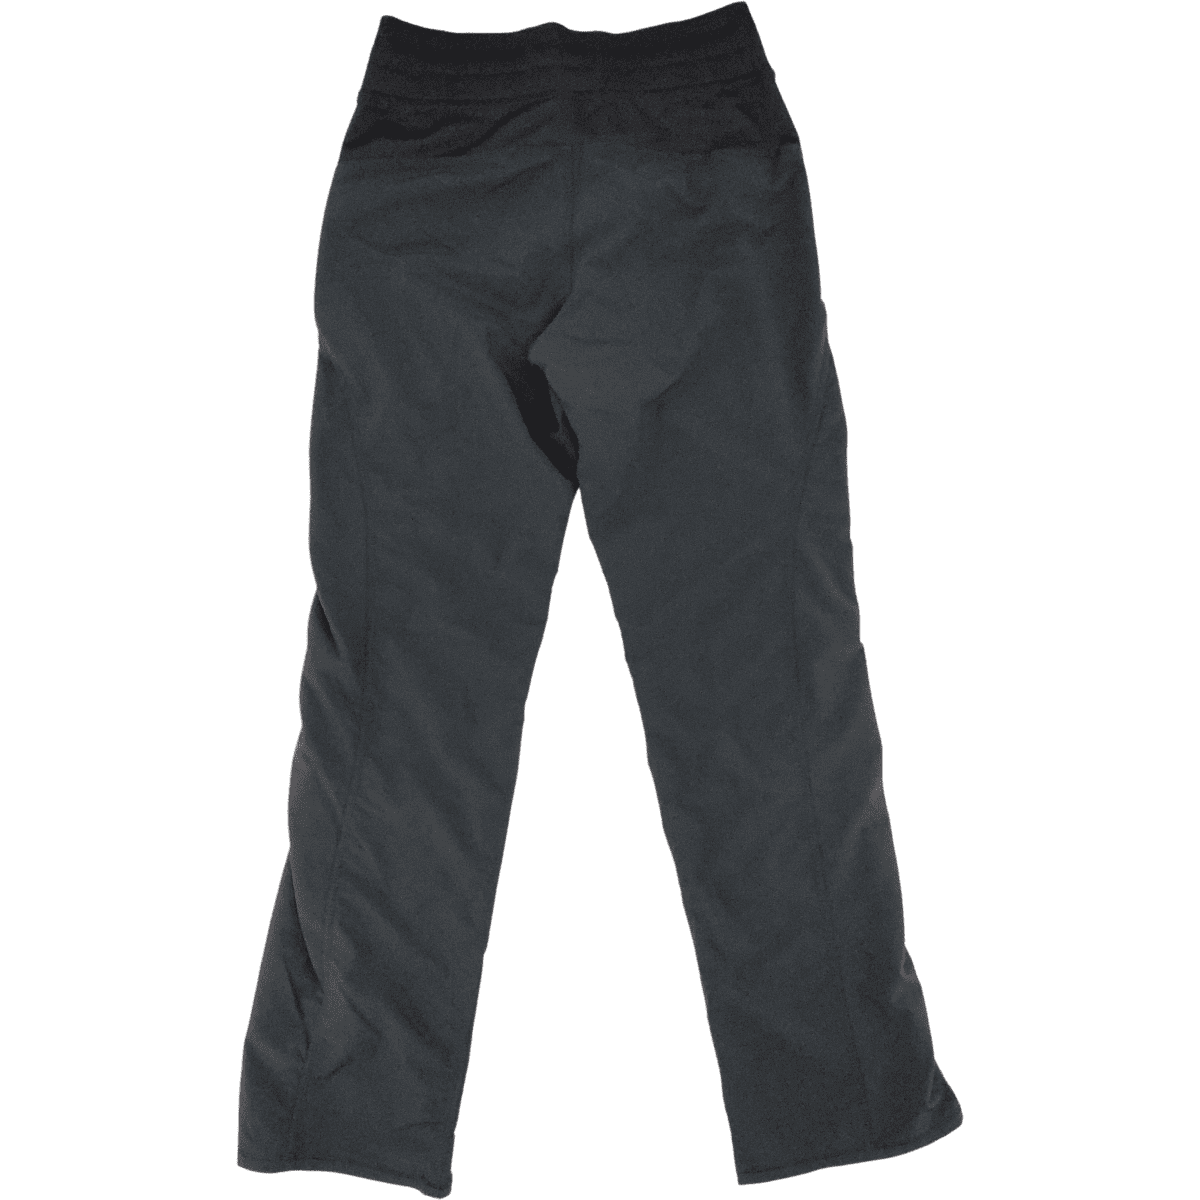 Kirkland Women’s Dark Grey Woven Active Pants / Size Large